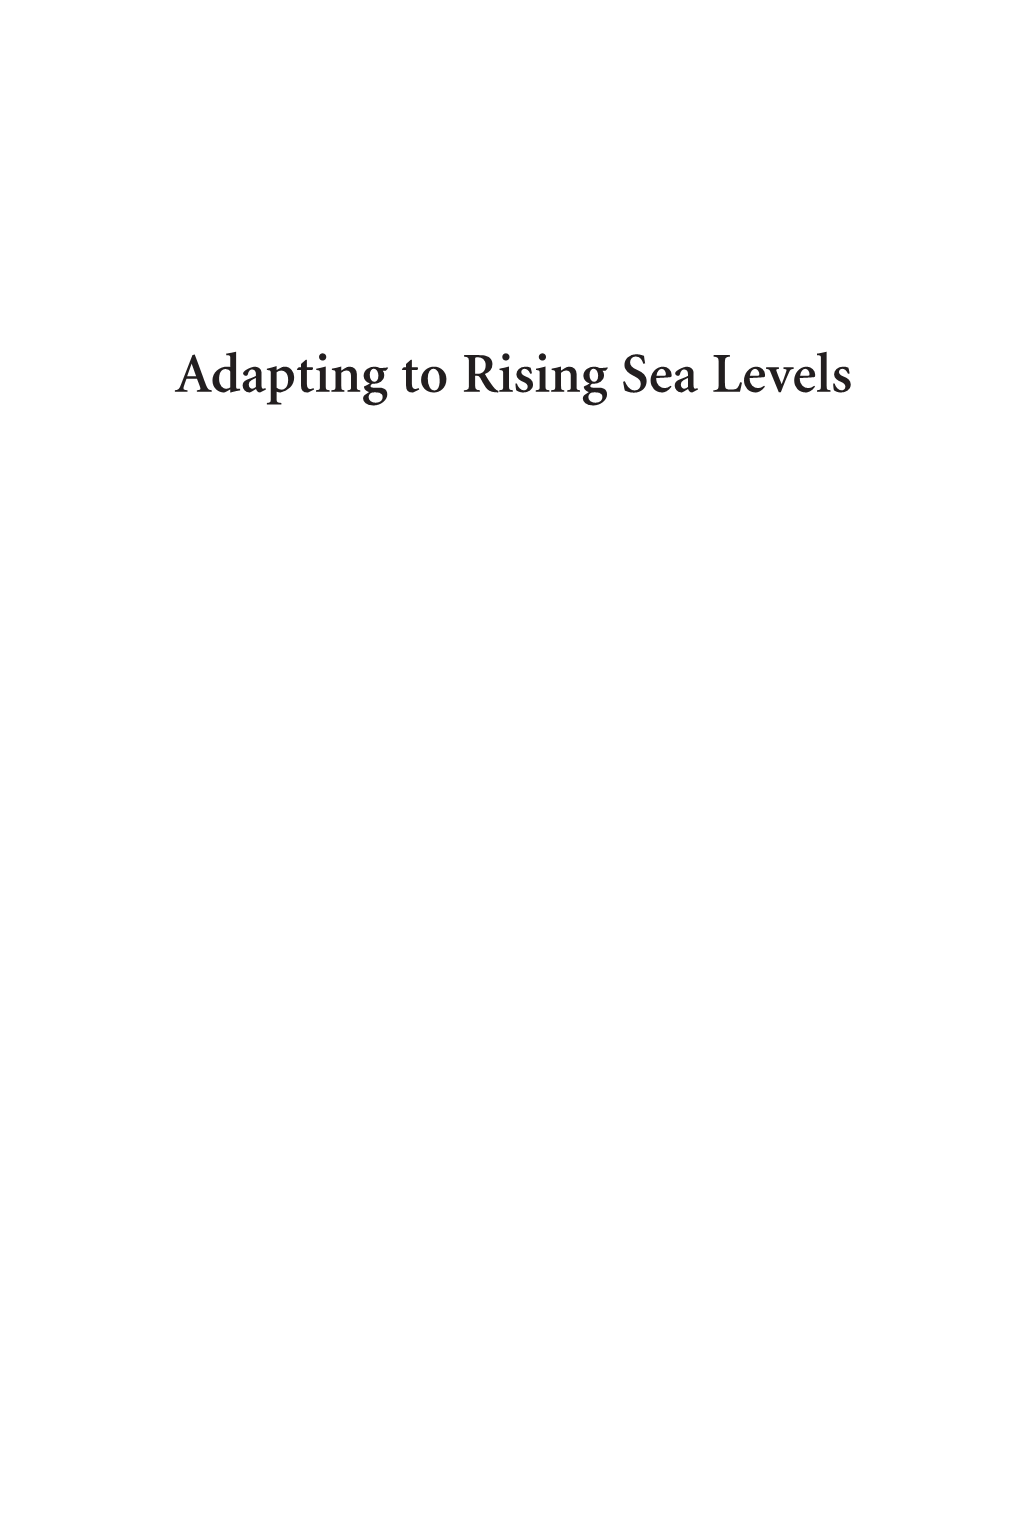 Adapting to Rising Sea Levels Peloso 00 Fm-Flip 2 9/27/17 9:53 AM Page Ii Peloso 00 Fm-Flip 2 9/27/17 9:53 AM Page Iii